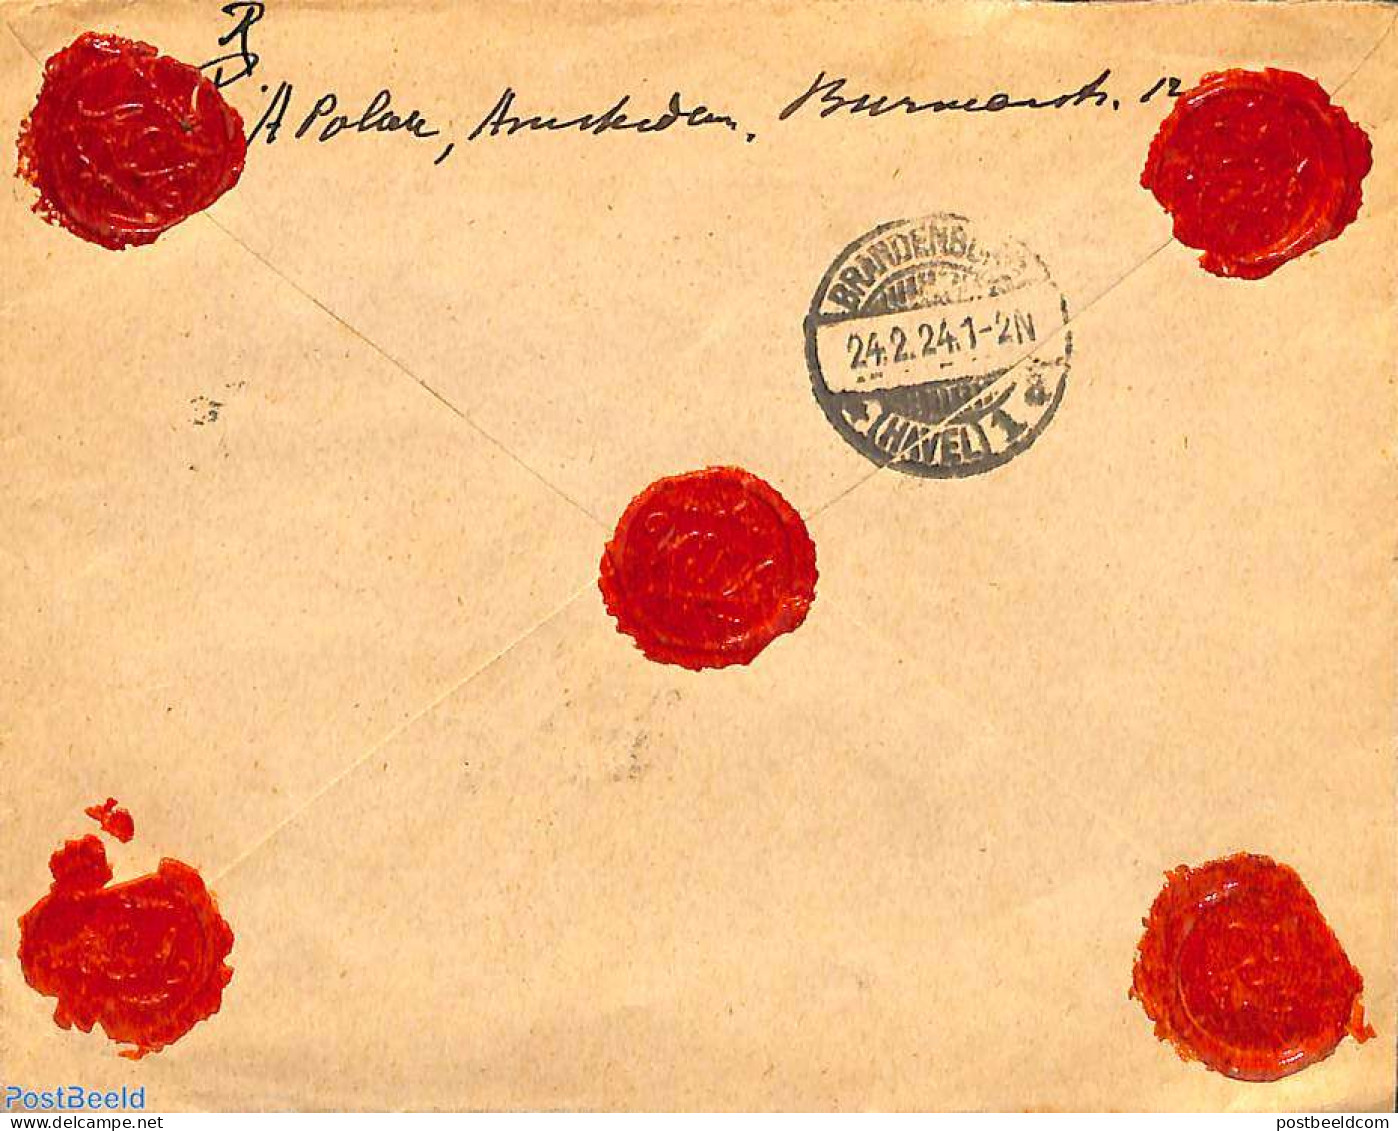 Netherlands 1924 Registered Cover From Amsterdam Tulpplein To Brandenburg, Postal History - Covers & Documents